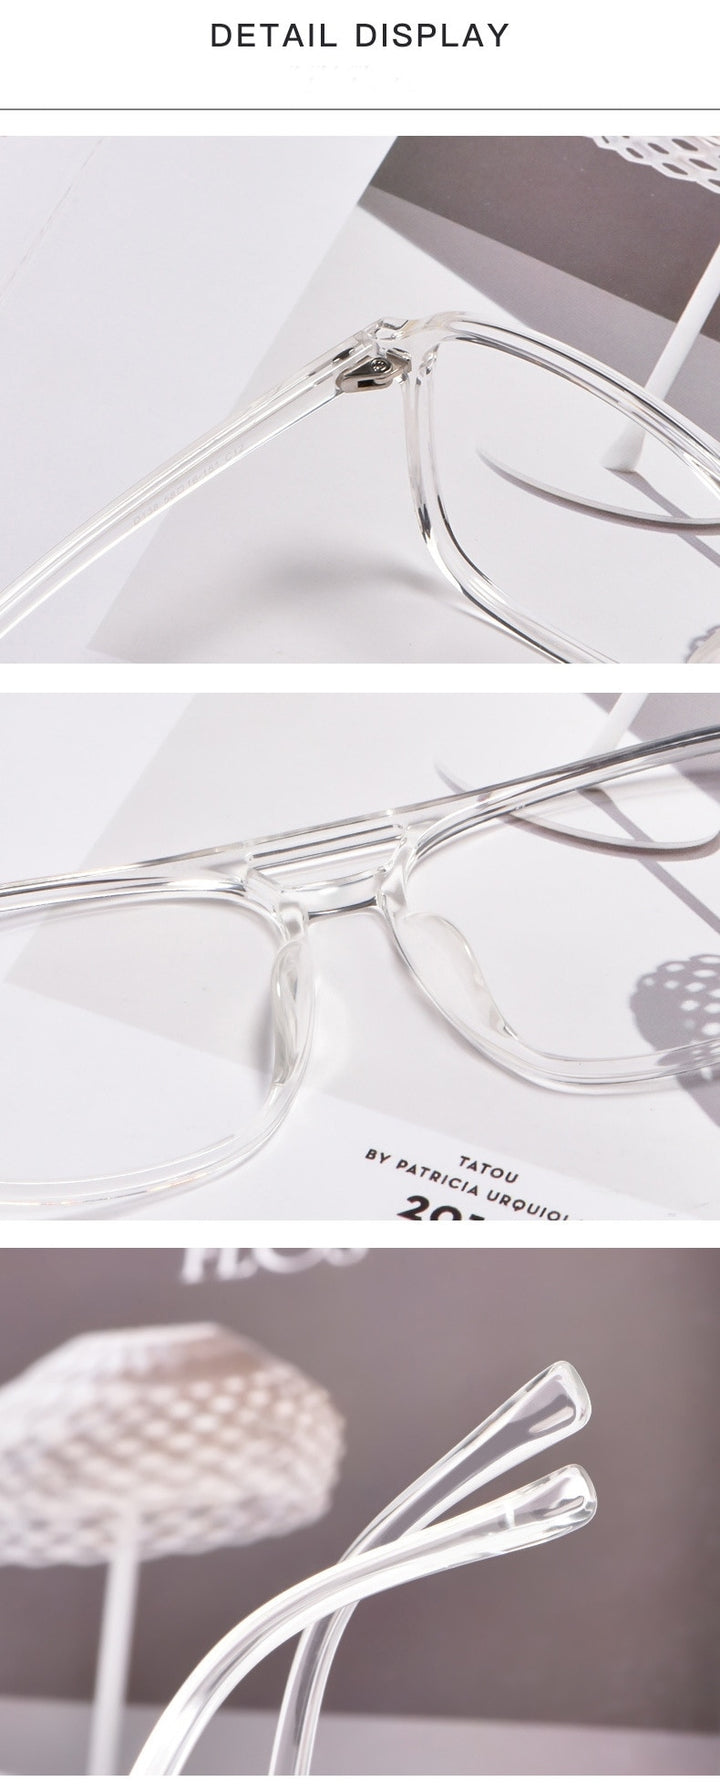 Yimaruili Unisex Full Rim TR 90 Resin Double Bridge Frame Eyeglasses D138 Full Rim Yimaruili Eyeglasses   